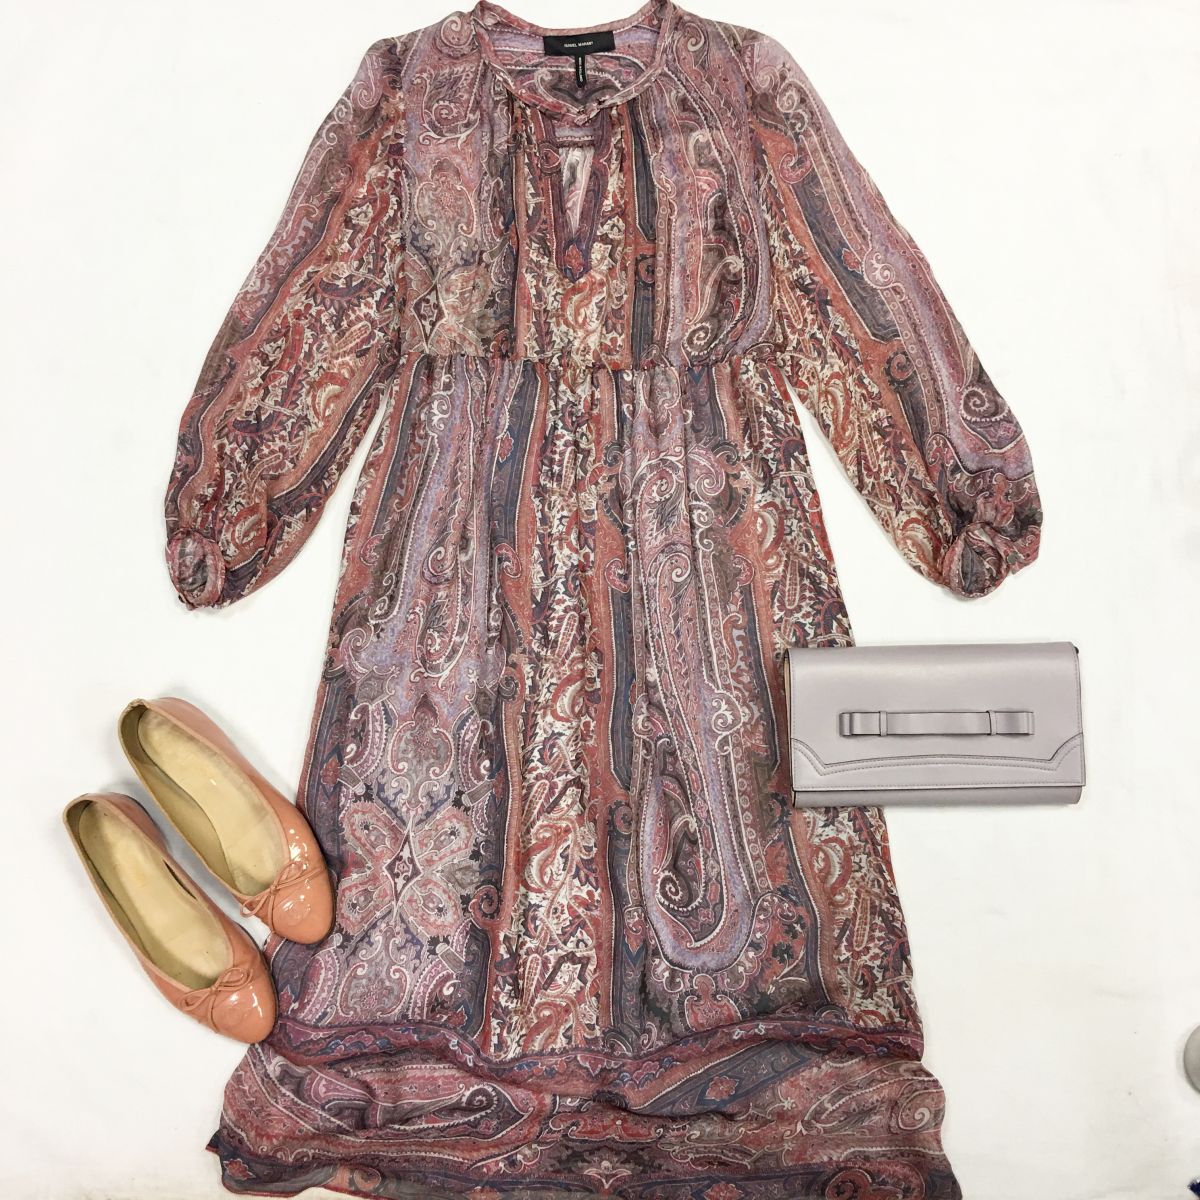 Платье Иsabel Marant размер 38 цена 10 770 руб Балетки Chanel размер 40 цена 6 154 руб Сумочка Red Valentino 